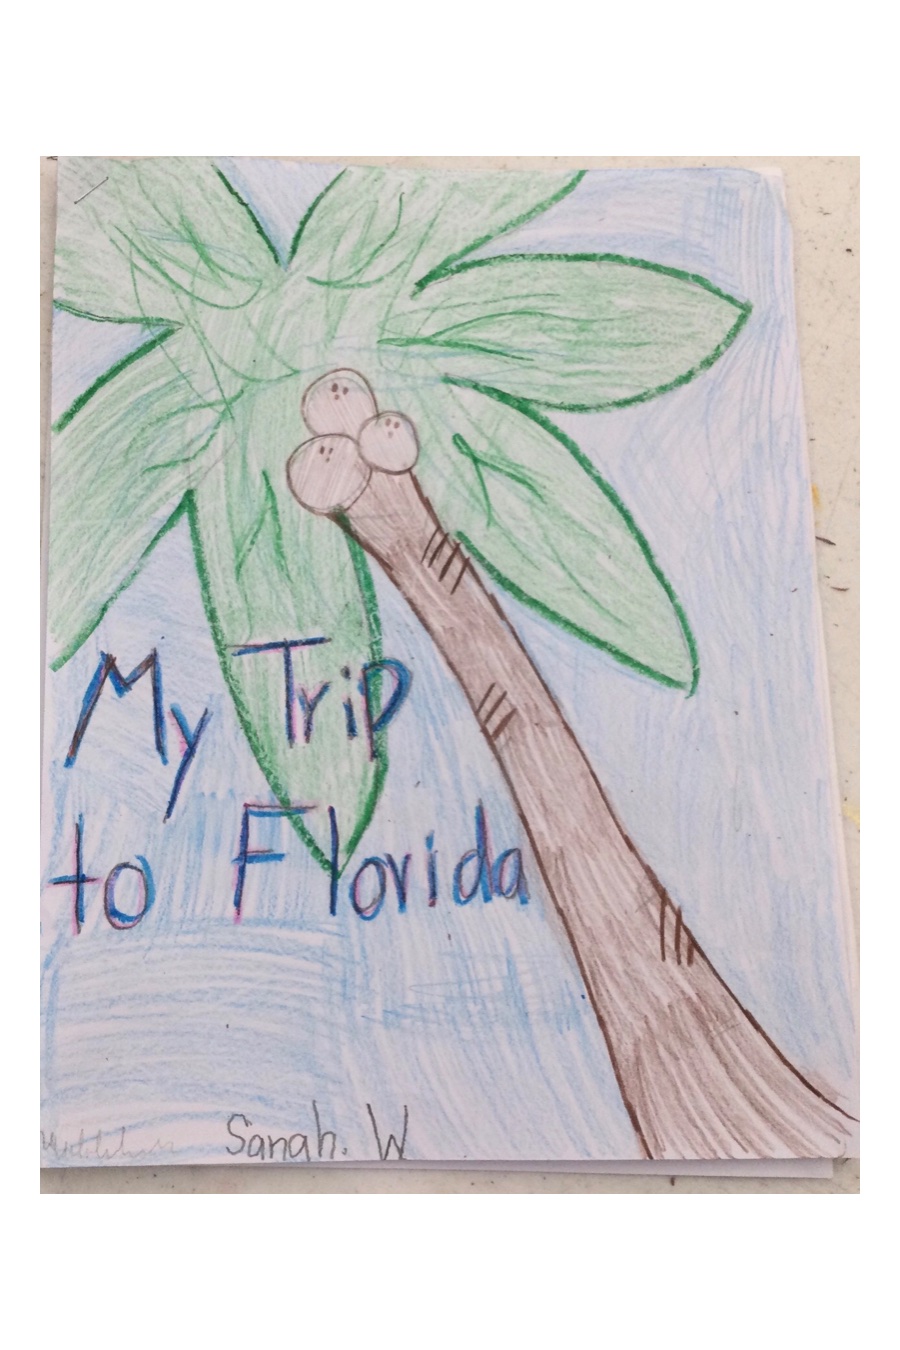 My Trip to Florida by Sanah W